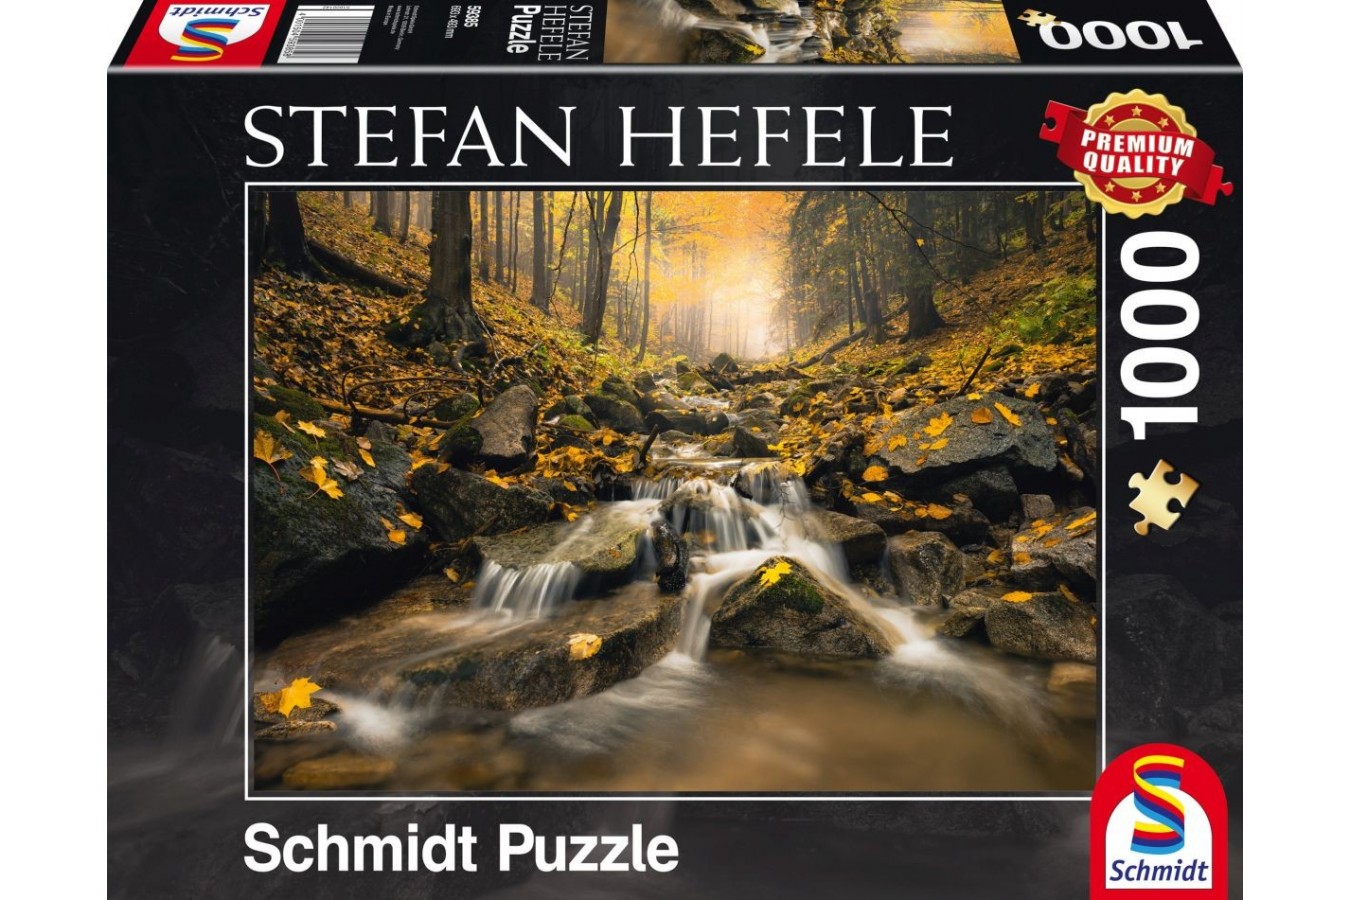 Puzzle Schmidt - Stefan Hefele: Fabulosul parau, 1000 piese (59385)